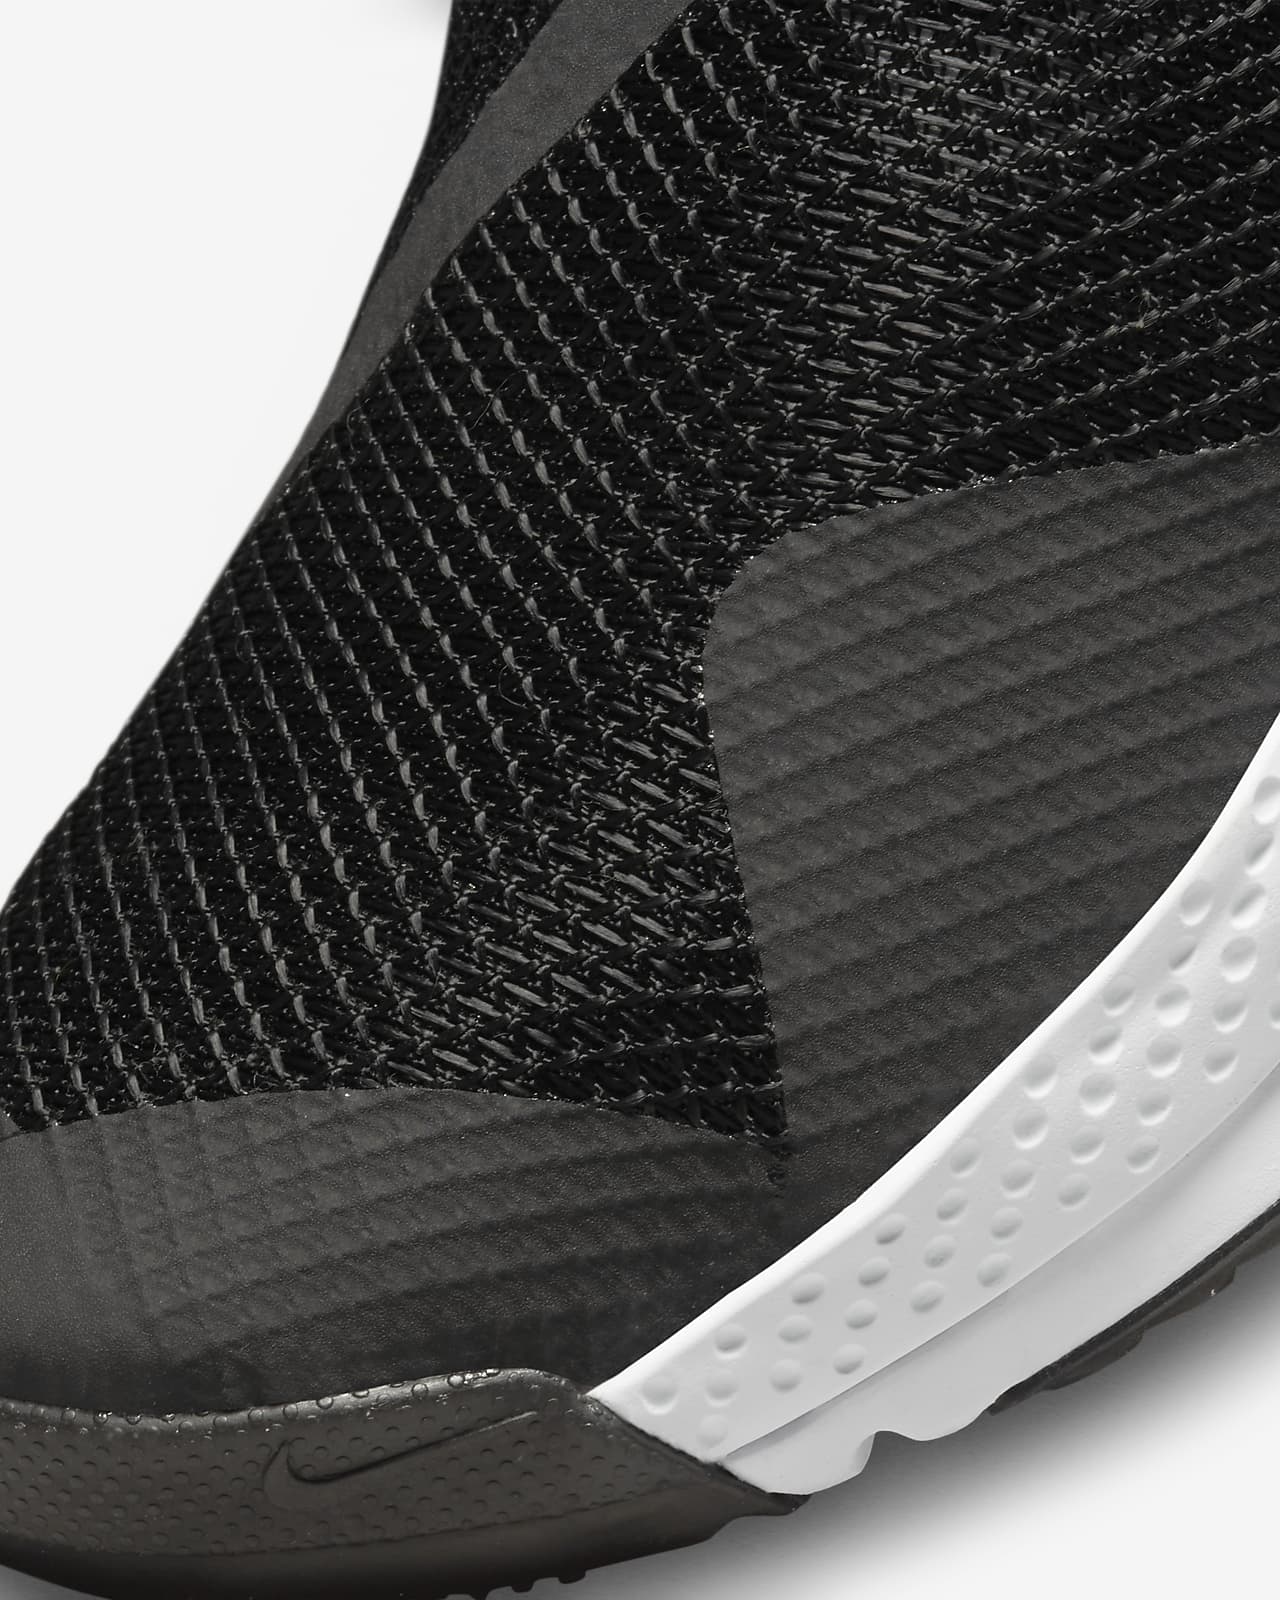 Nike Jordan Access Shoes Size 9US Brand New | eBay